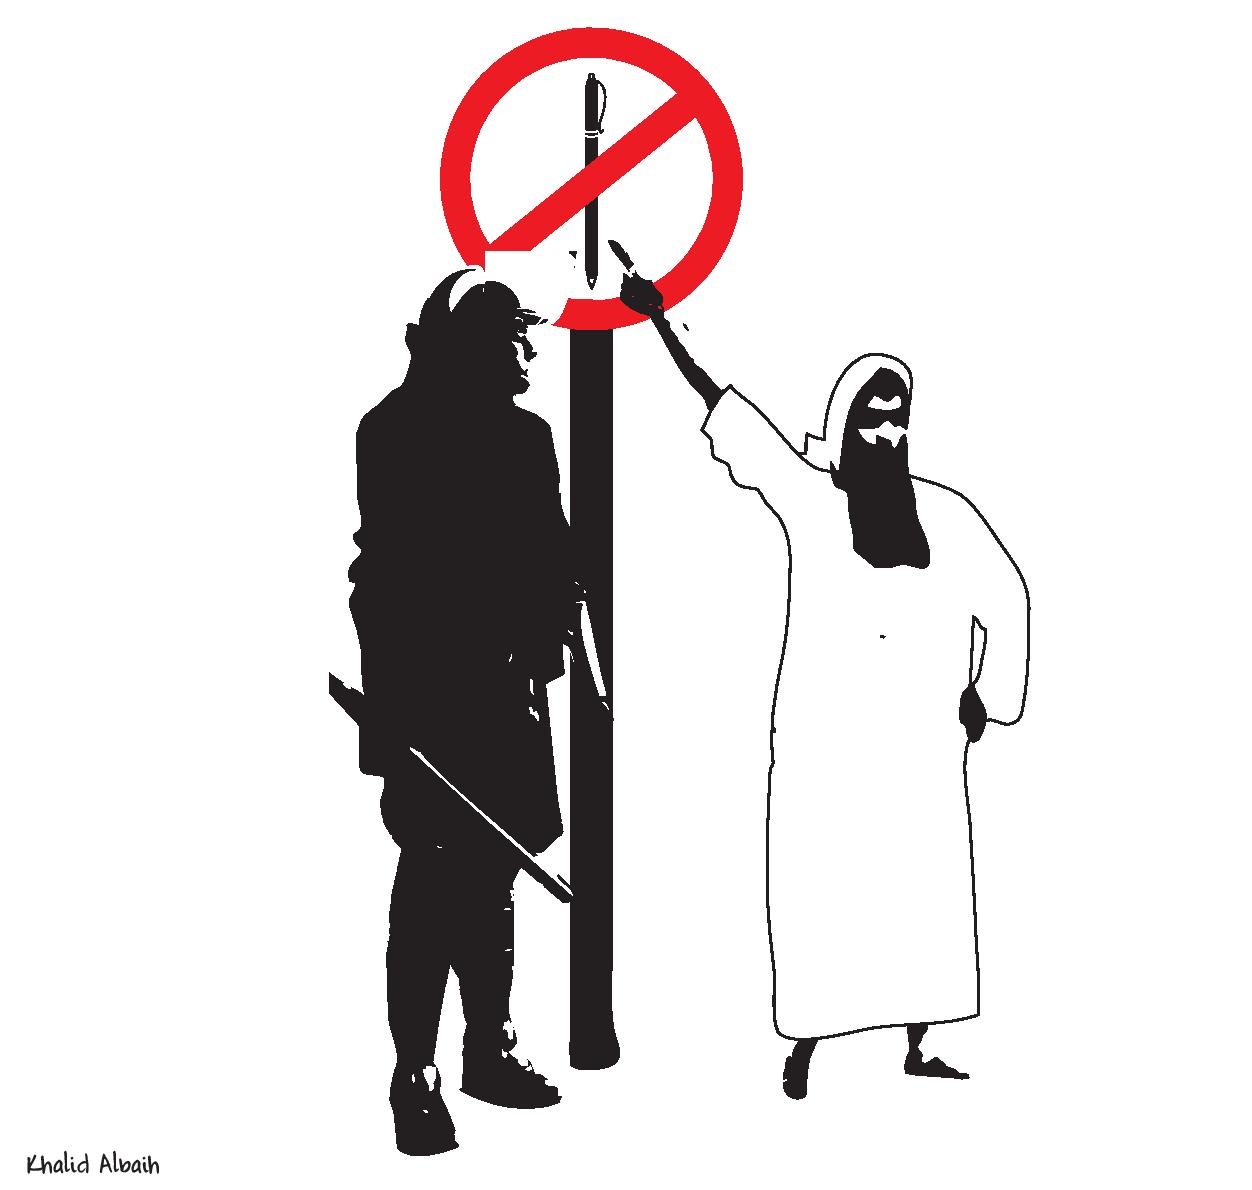 L’art de la satire de Khalid Albaih – The art of satire by Khalid Albaih